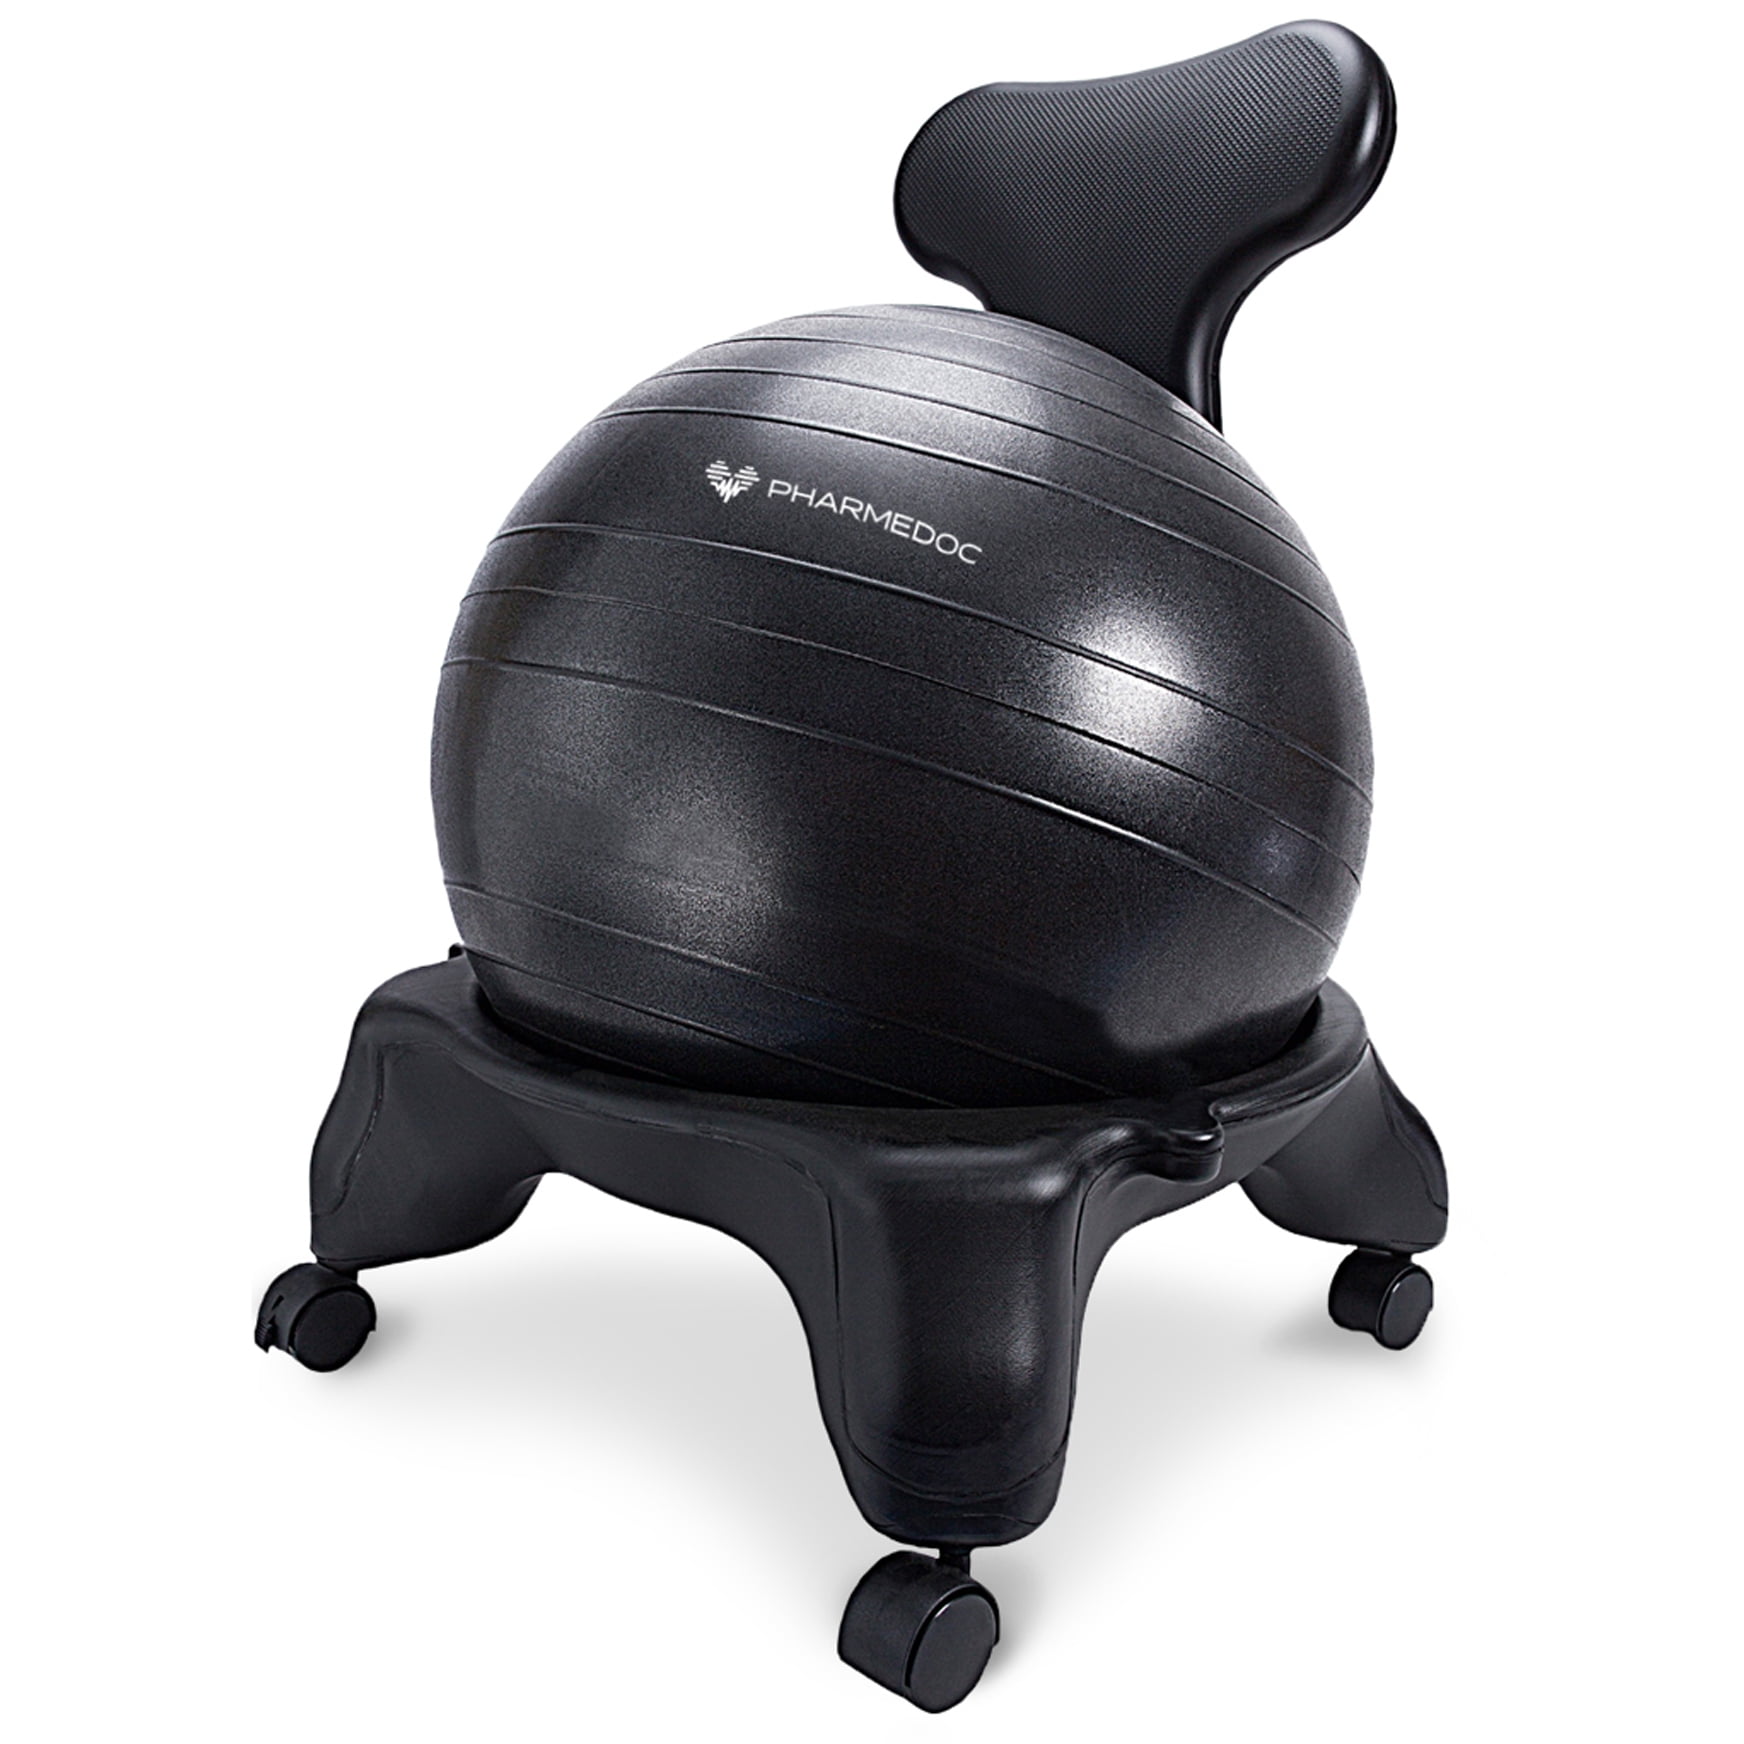 Pharmedoc Exercise Balance Ball Chair, Exercise Ball For Desk Chair